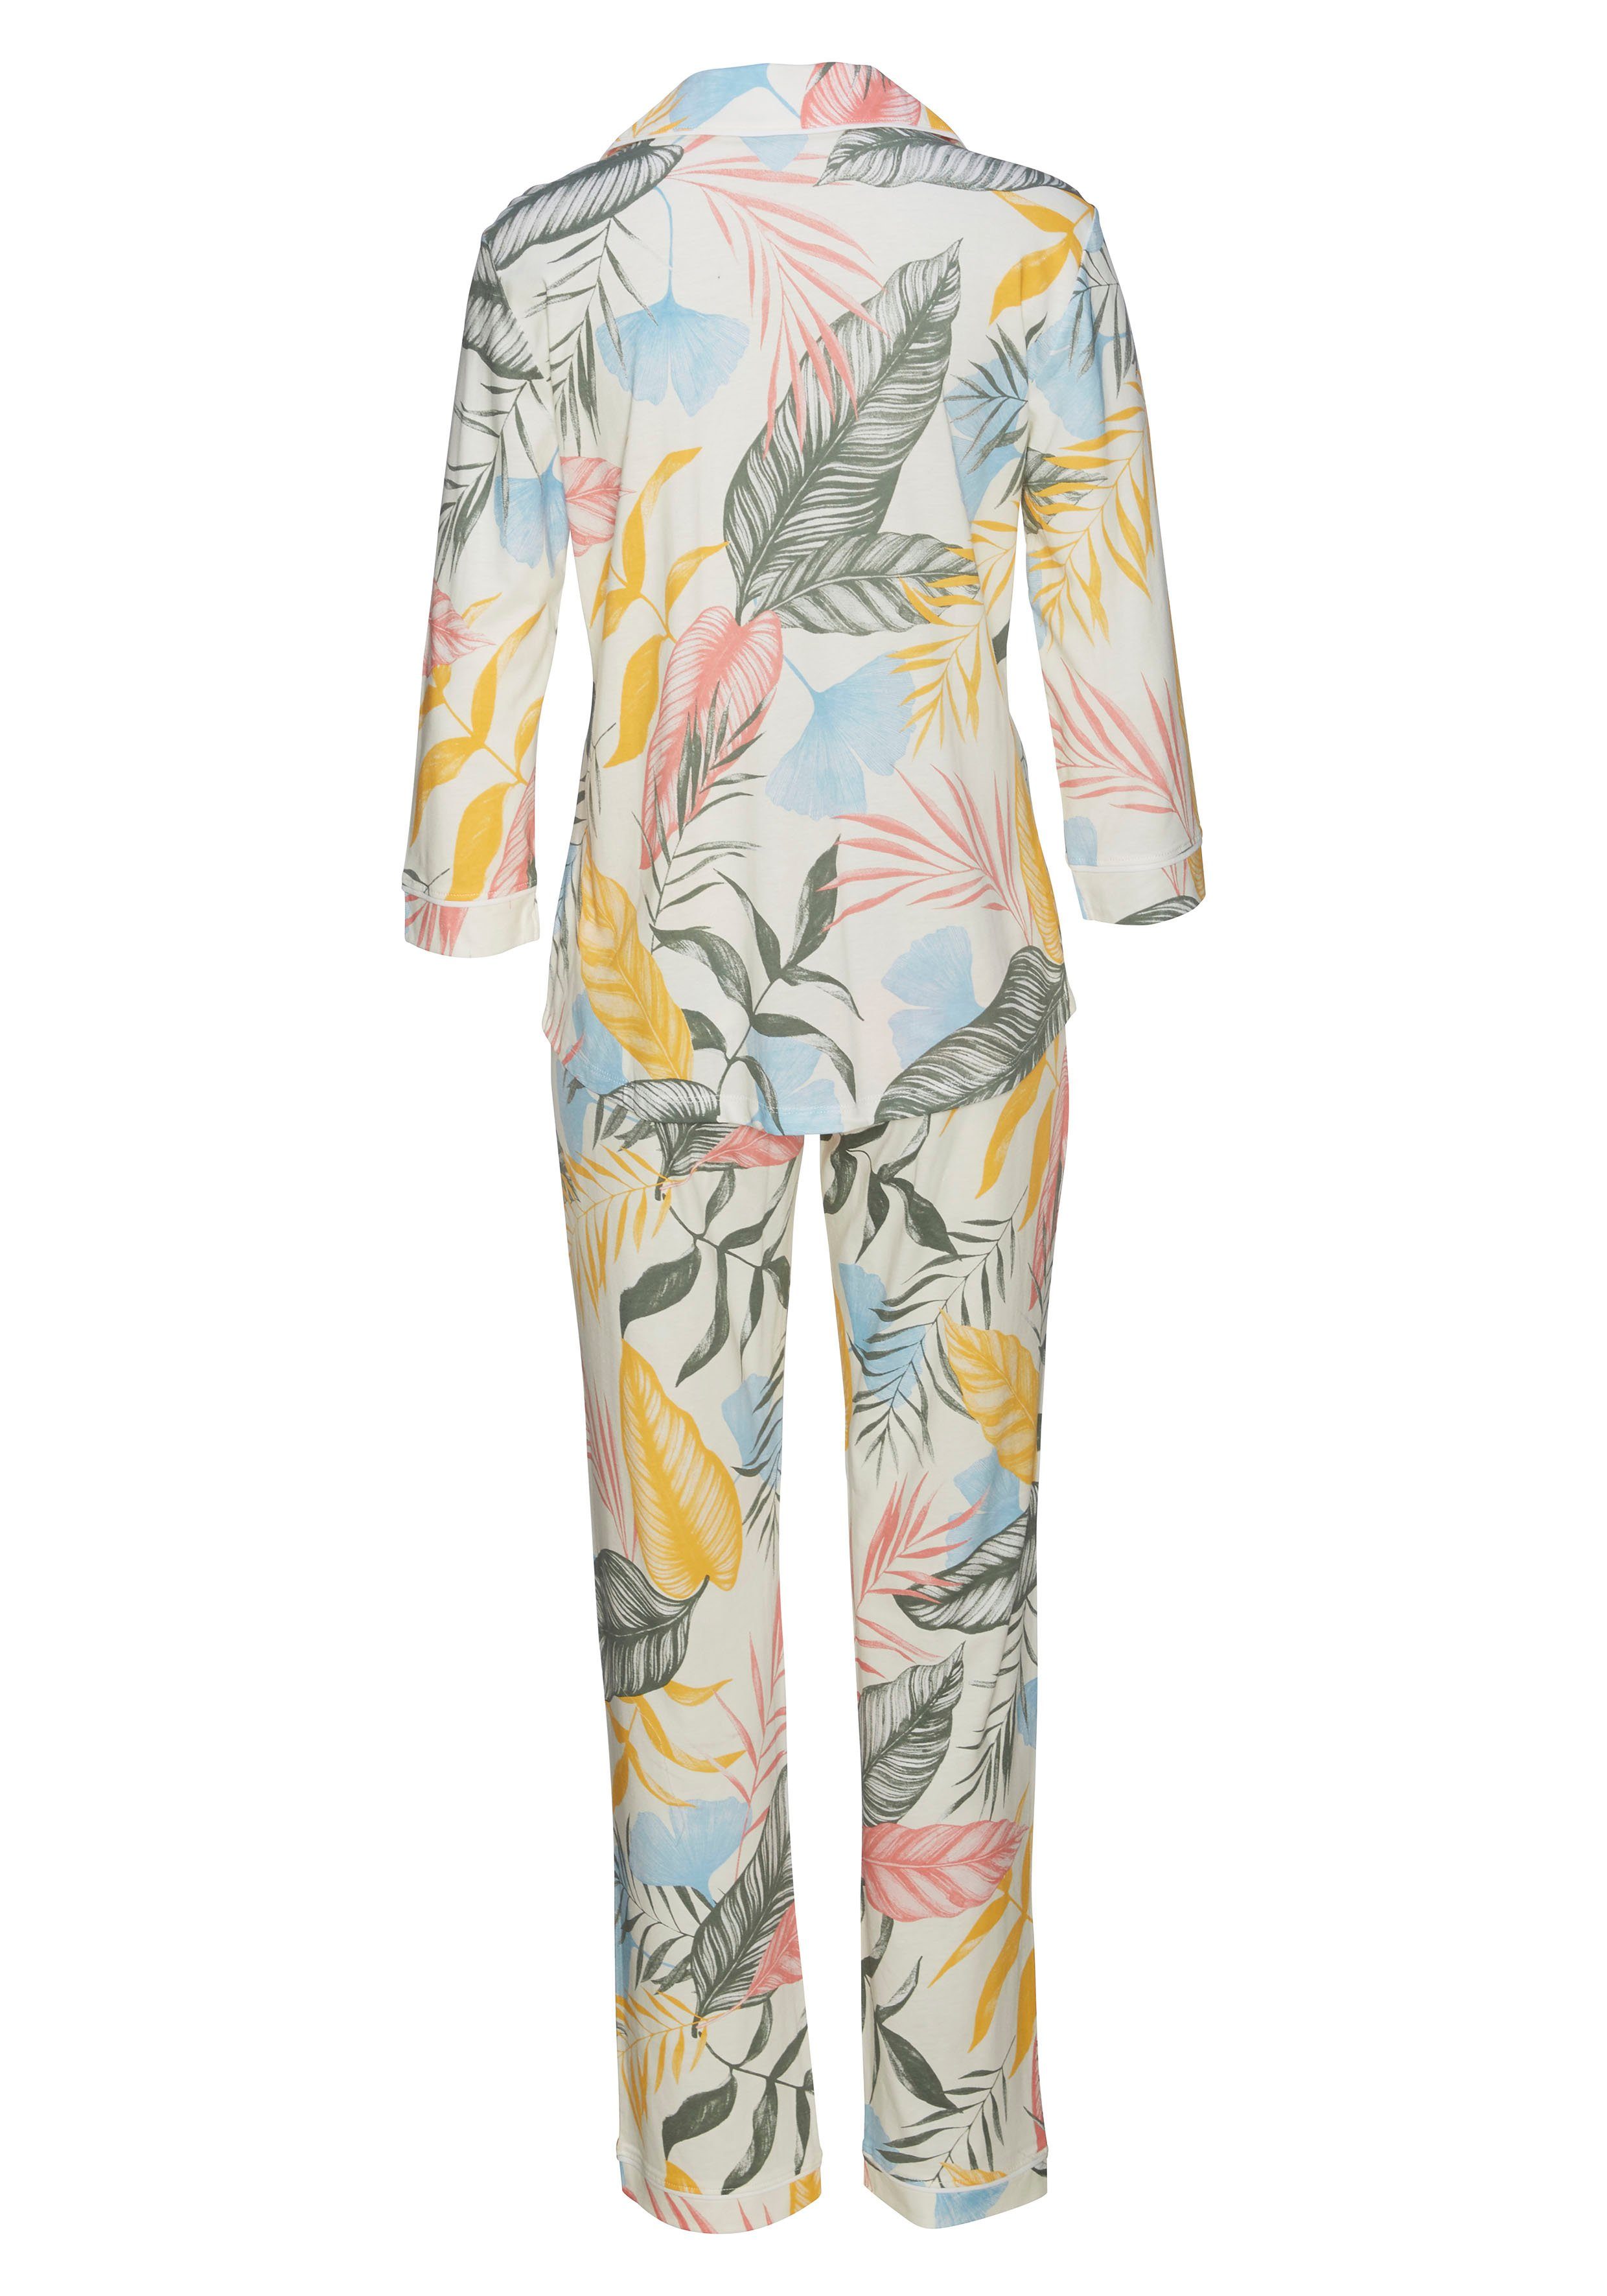 Vivance Dreams Pyjama Druck floralem mit gemustert-allover